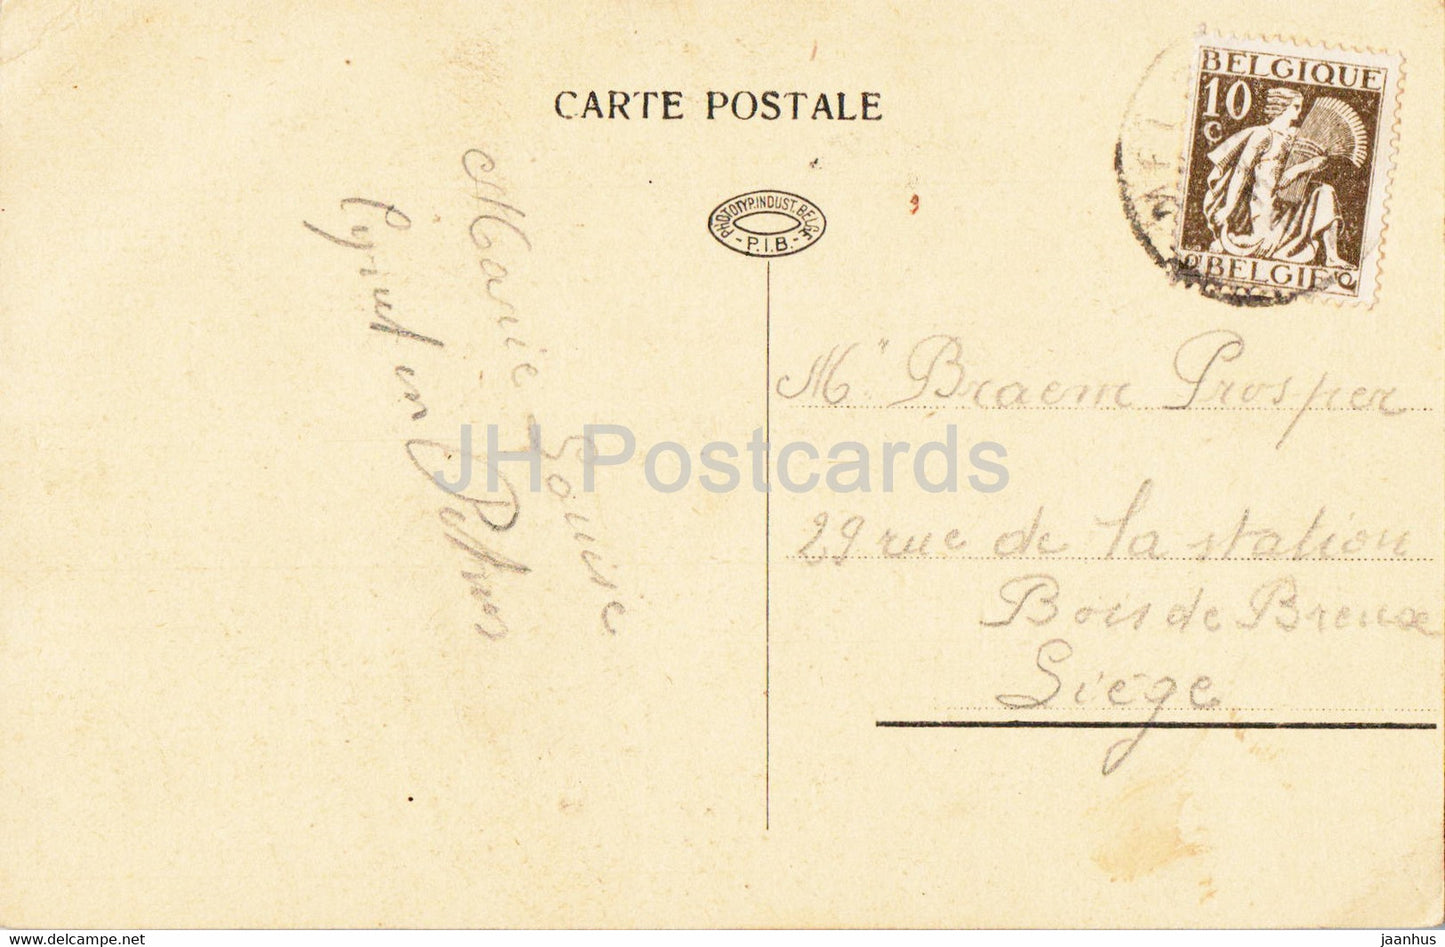 Melsele - Mirakuleuze - Linde van Gaverland - église - carte postale ancienne - Belgique - utilisé